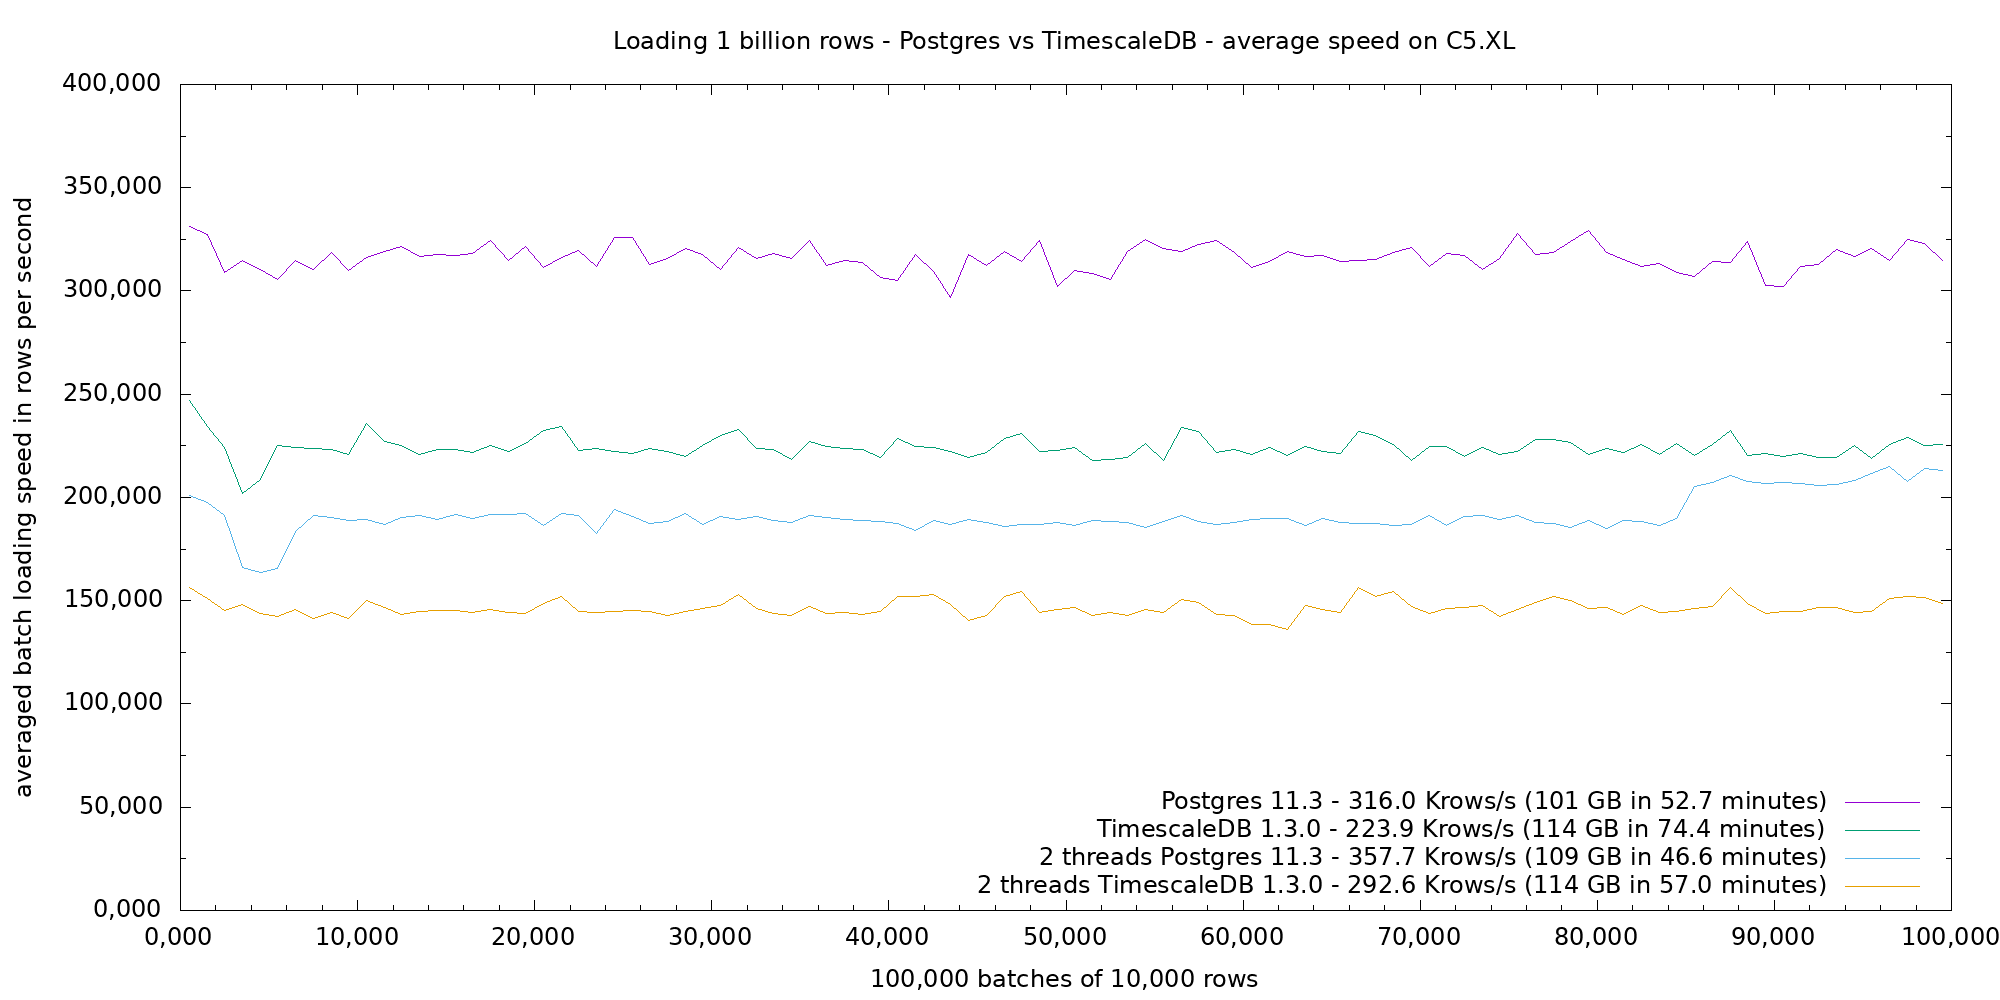 Postgres vs TimescaleDB average loading speed